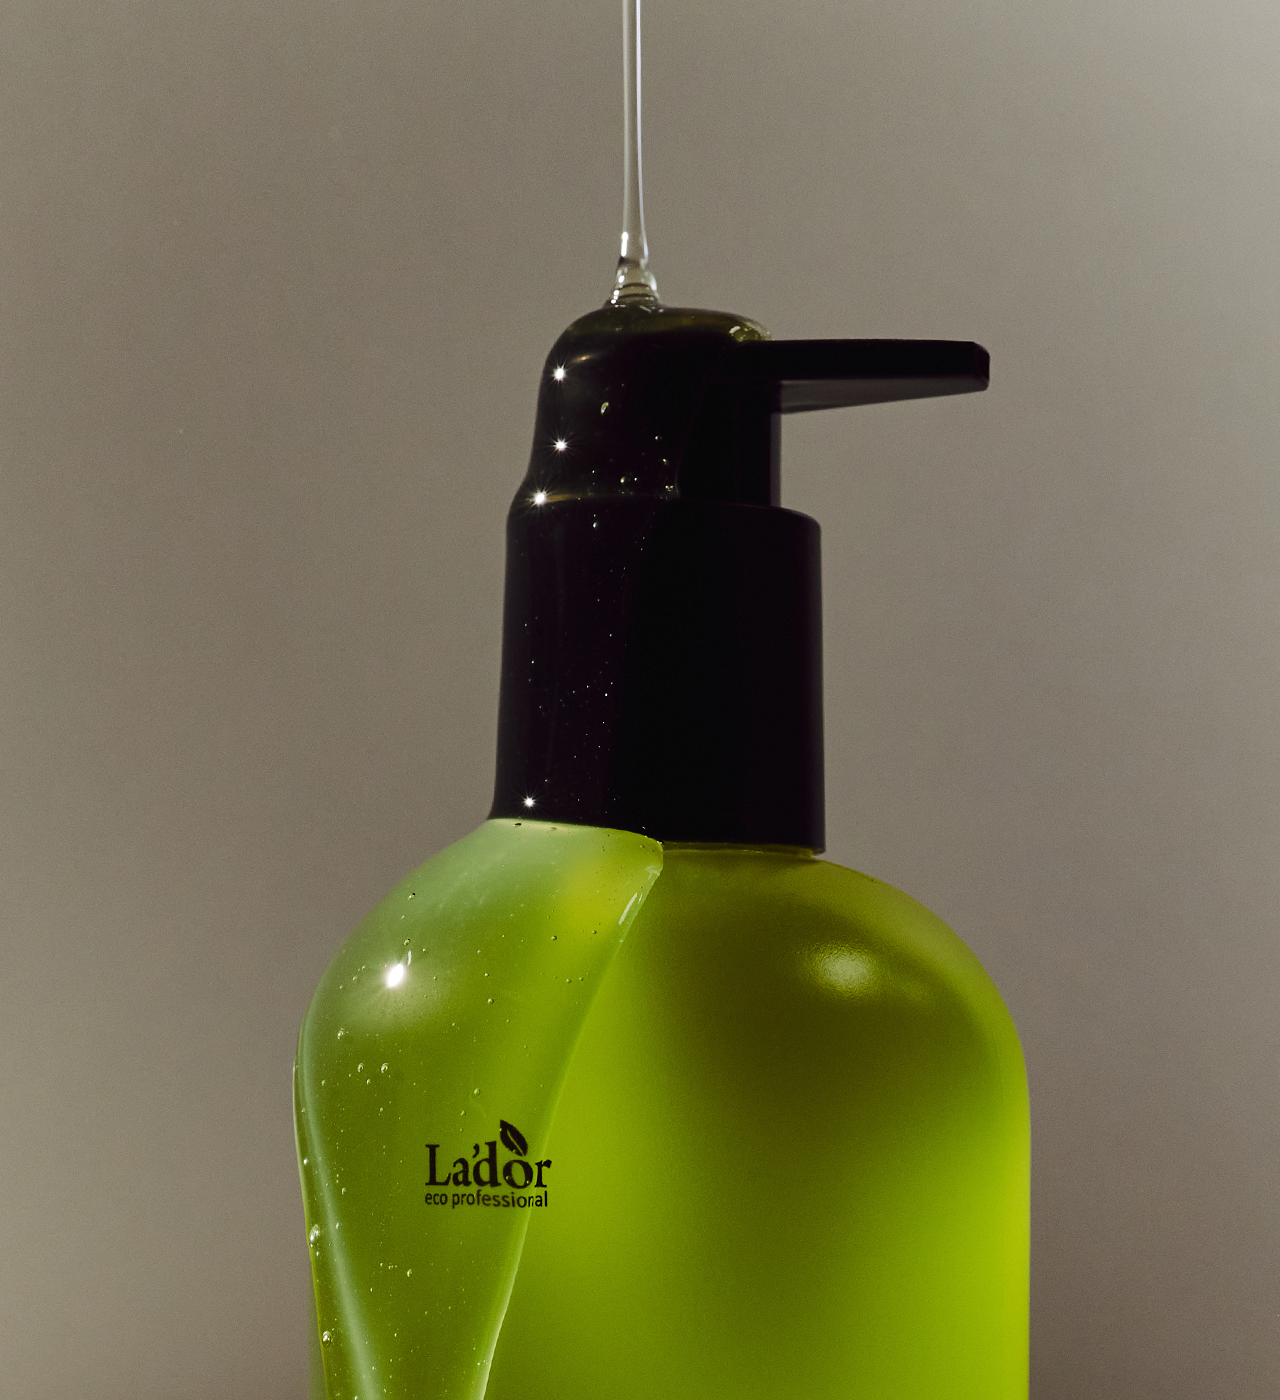 Keratin LPP Shampoo Perfume Edition 350ml 3types